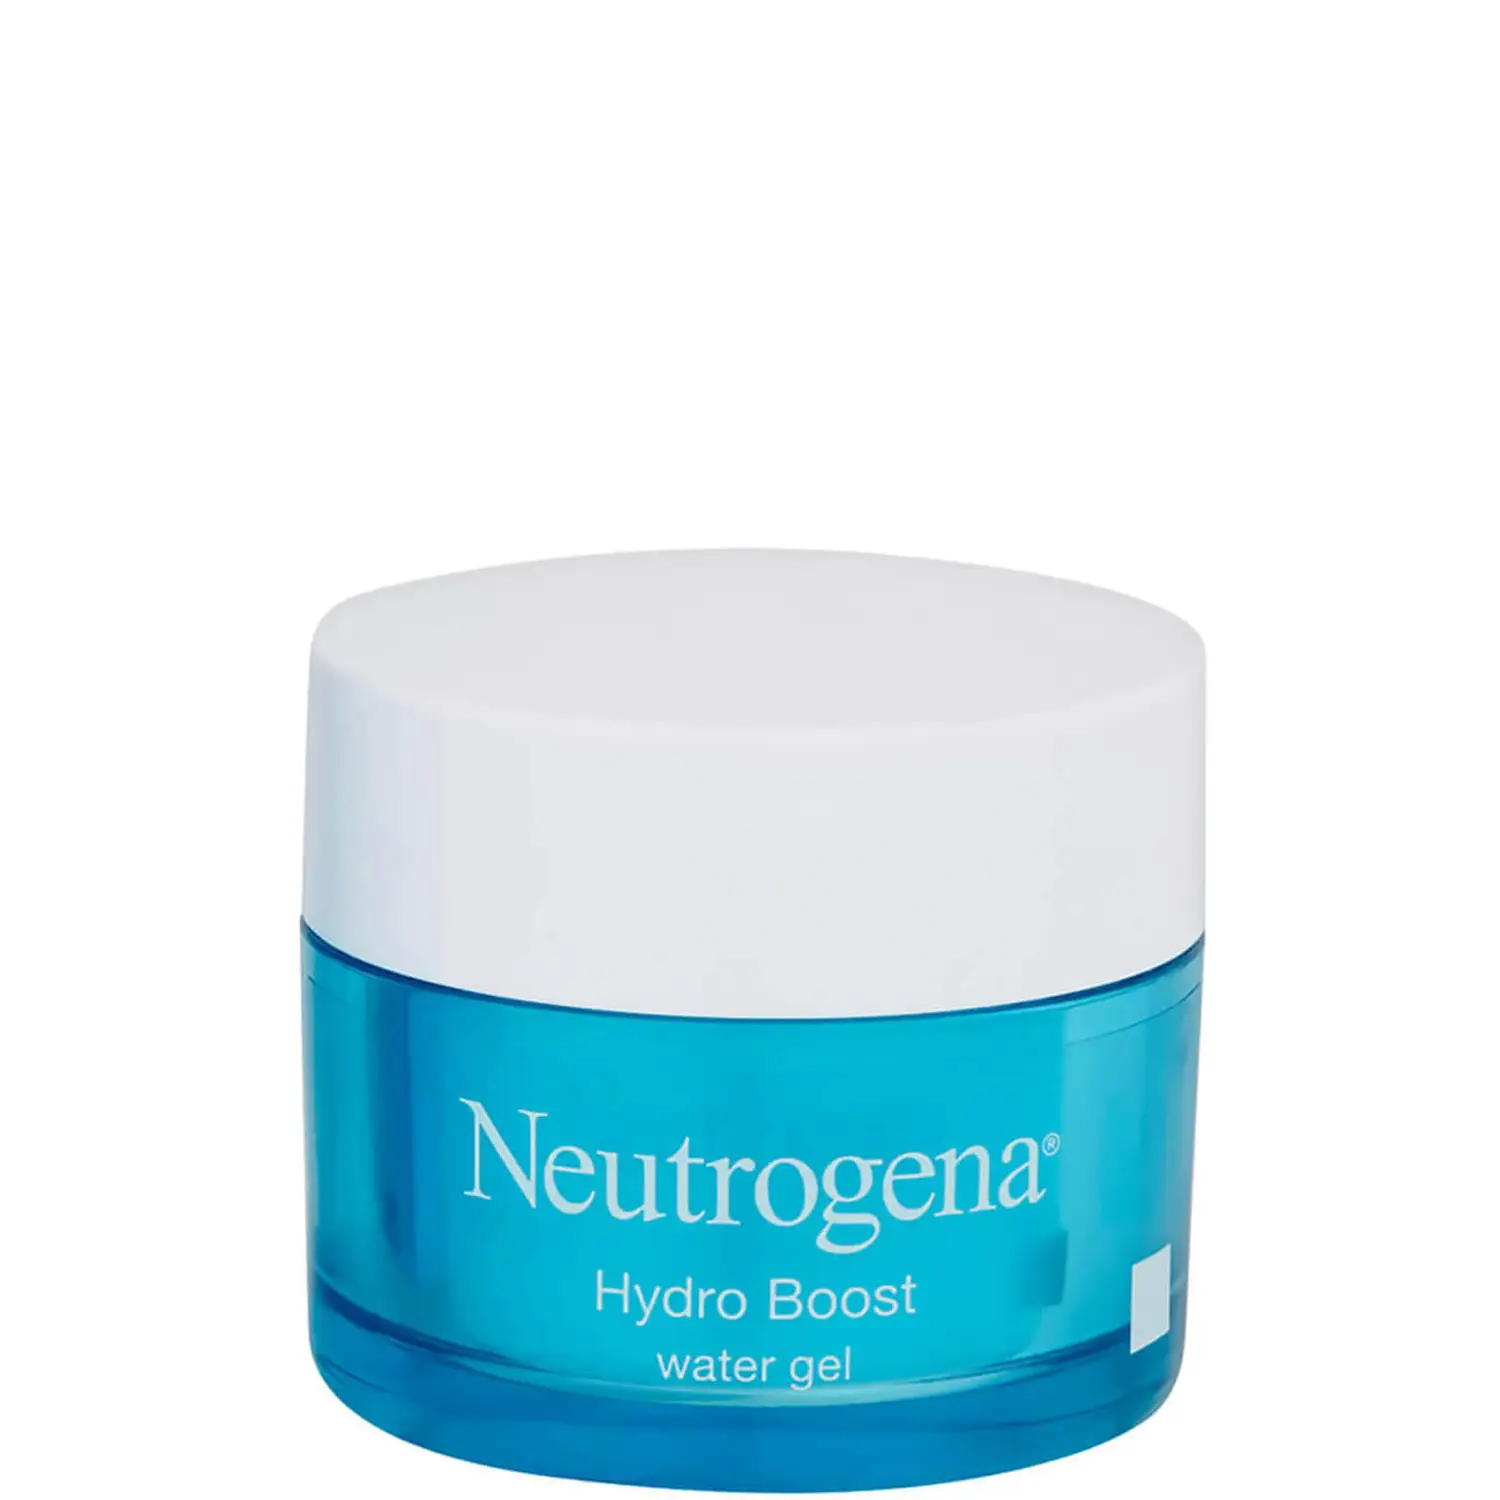 Neutrogena Hydro Boost Water Gel Moisturiser with Hyaluronic Acid for Dry Skin 50ml An ultra-hydrating yet light water-gel moisturiser for all skin types. £13.49